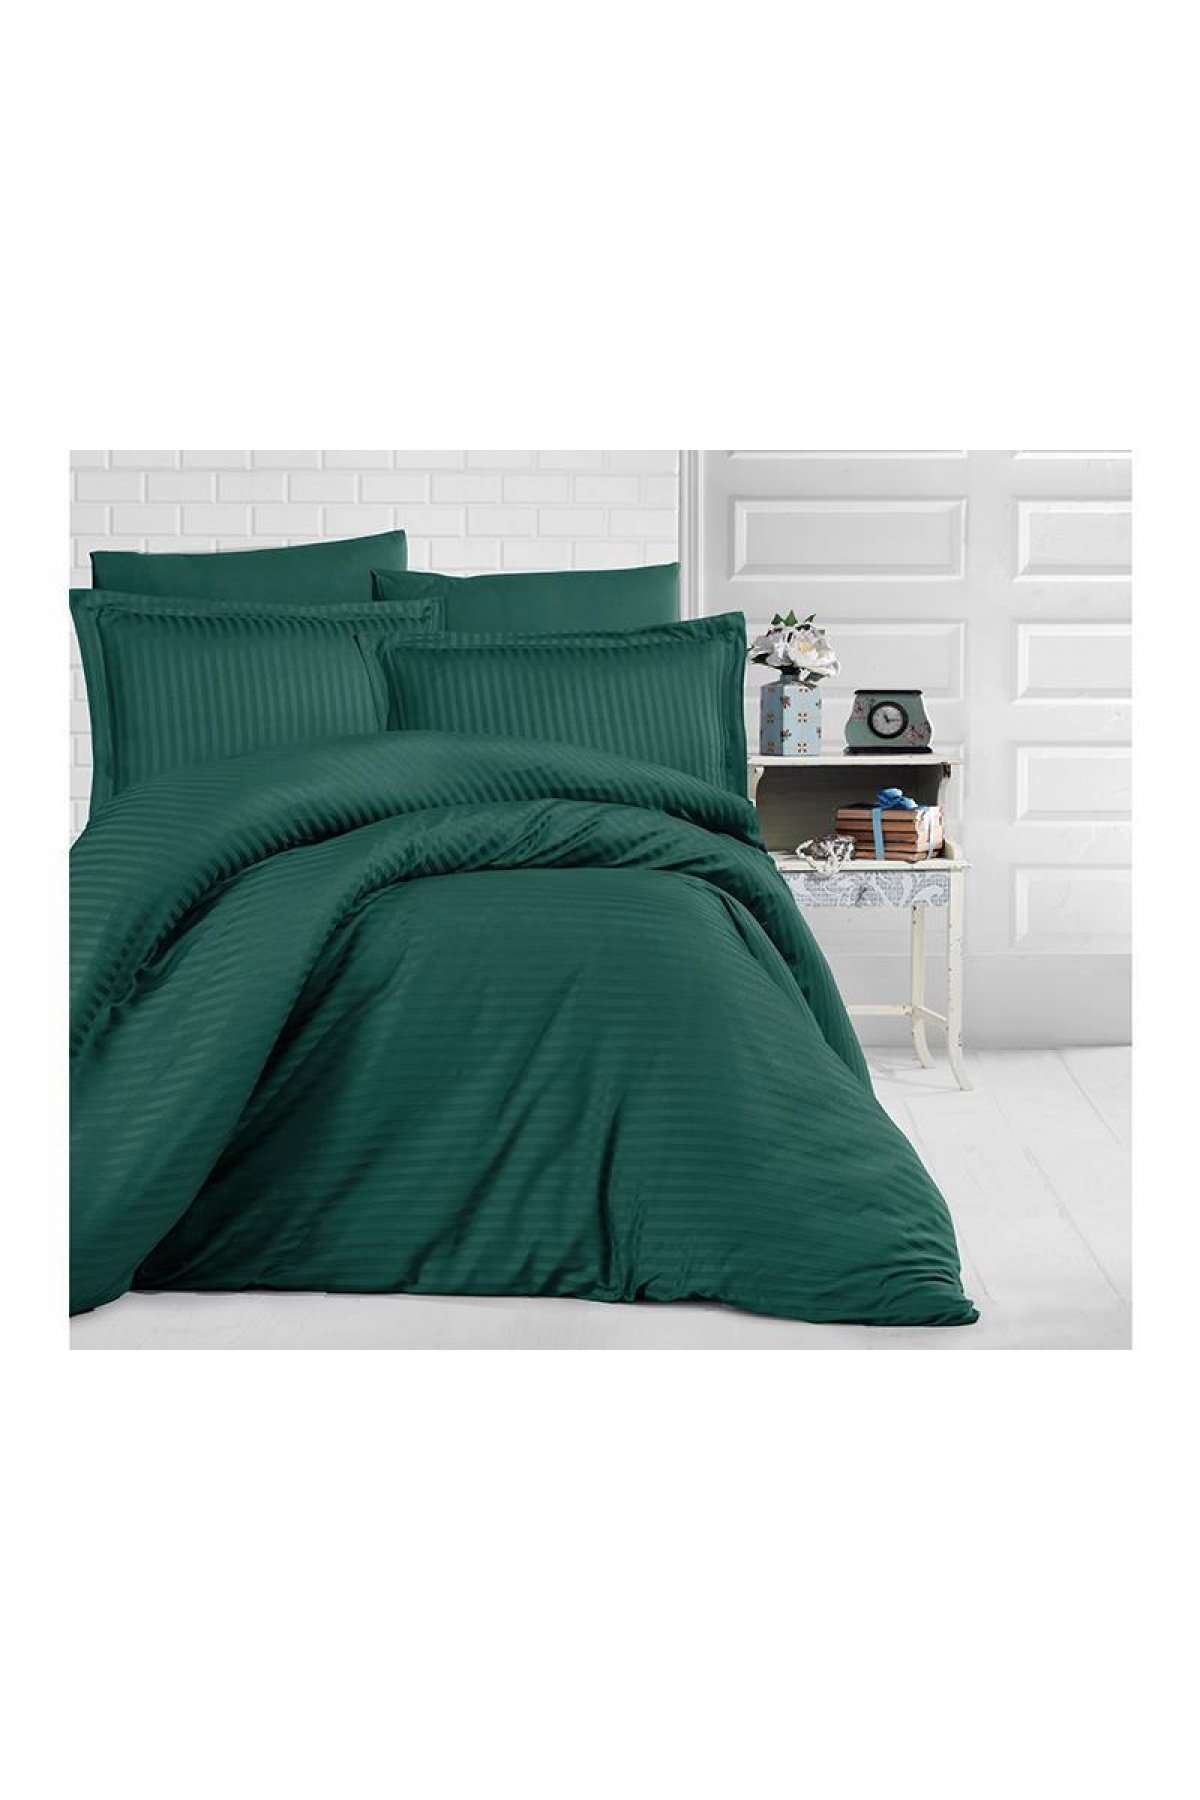 Bedding-Green